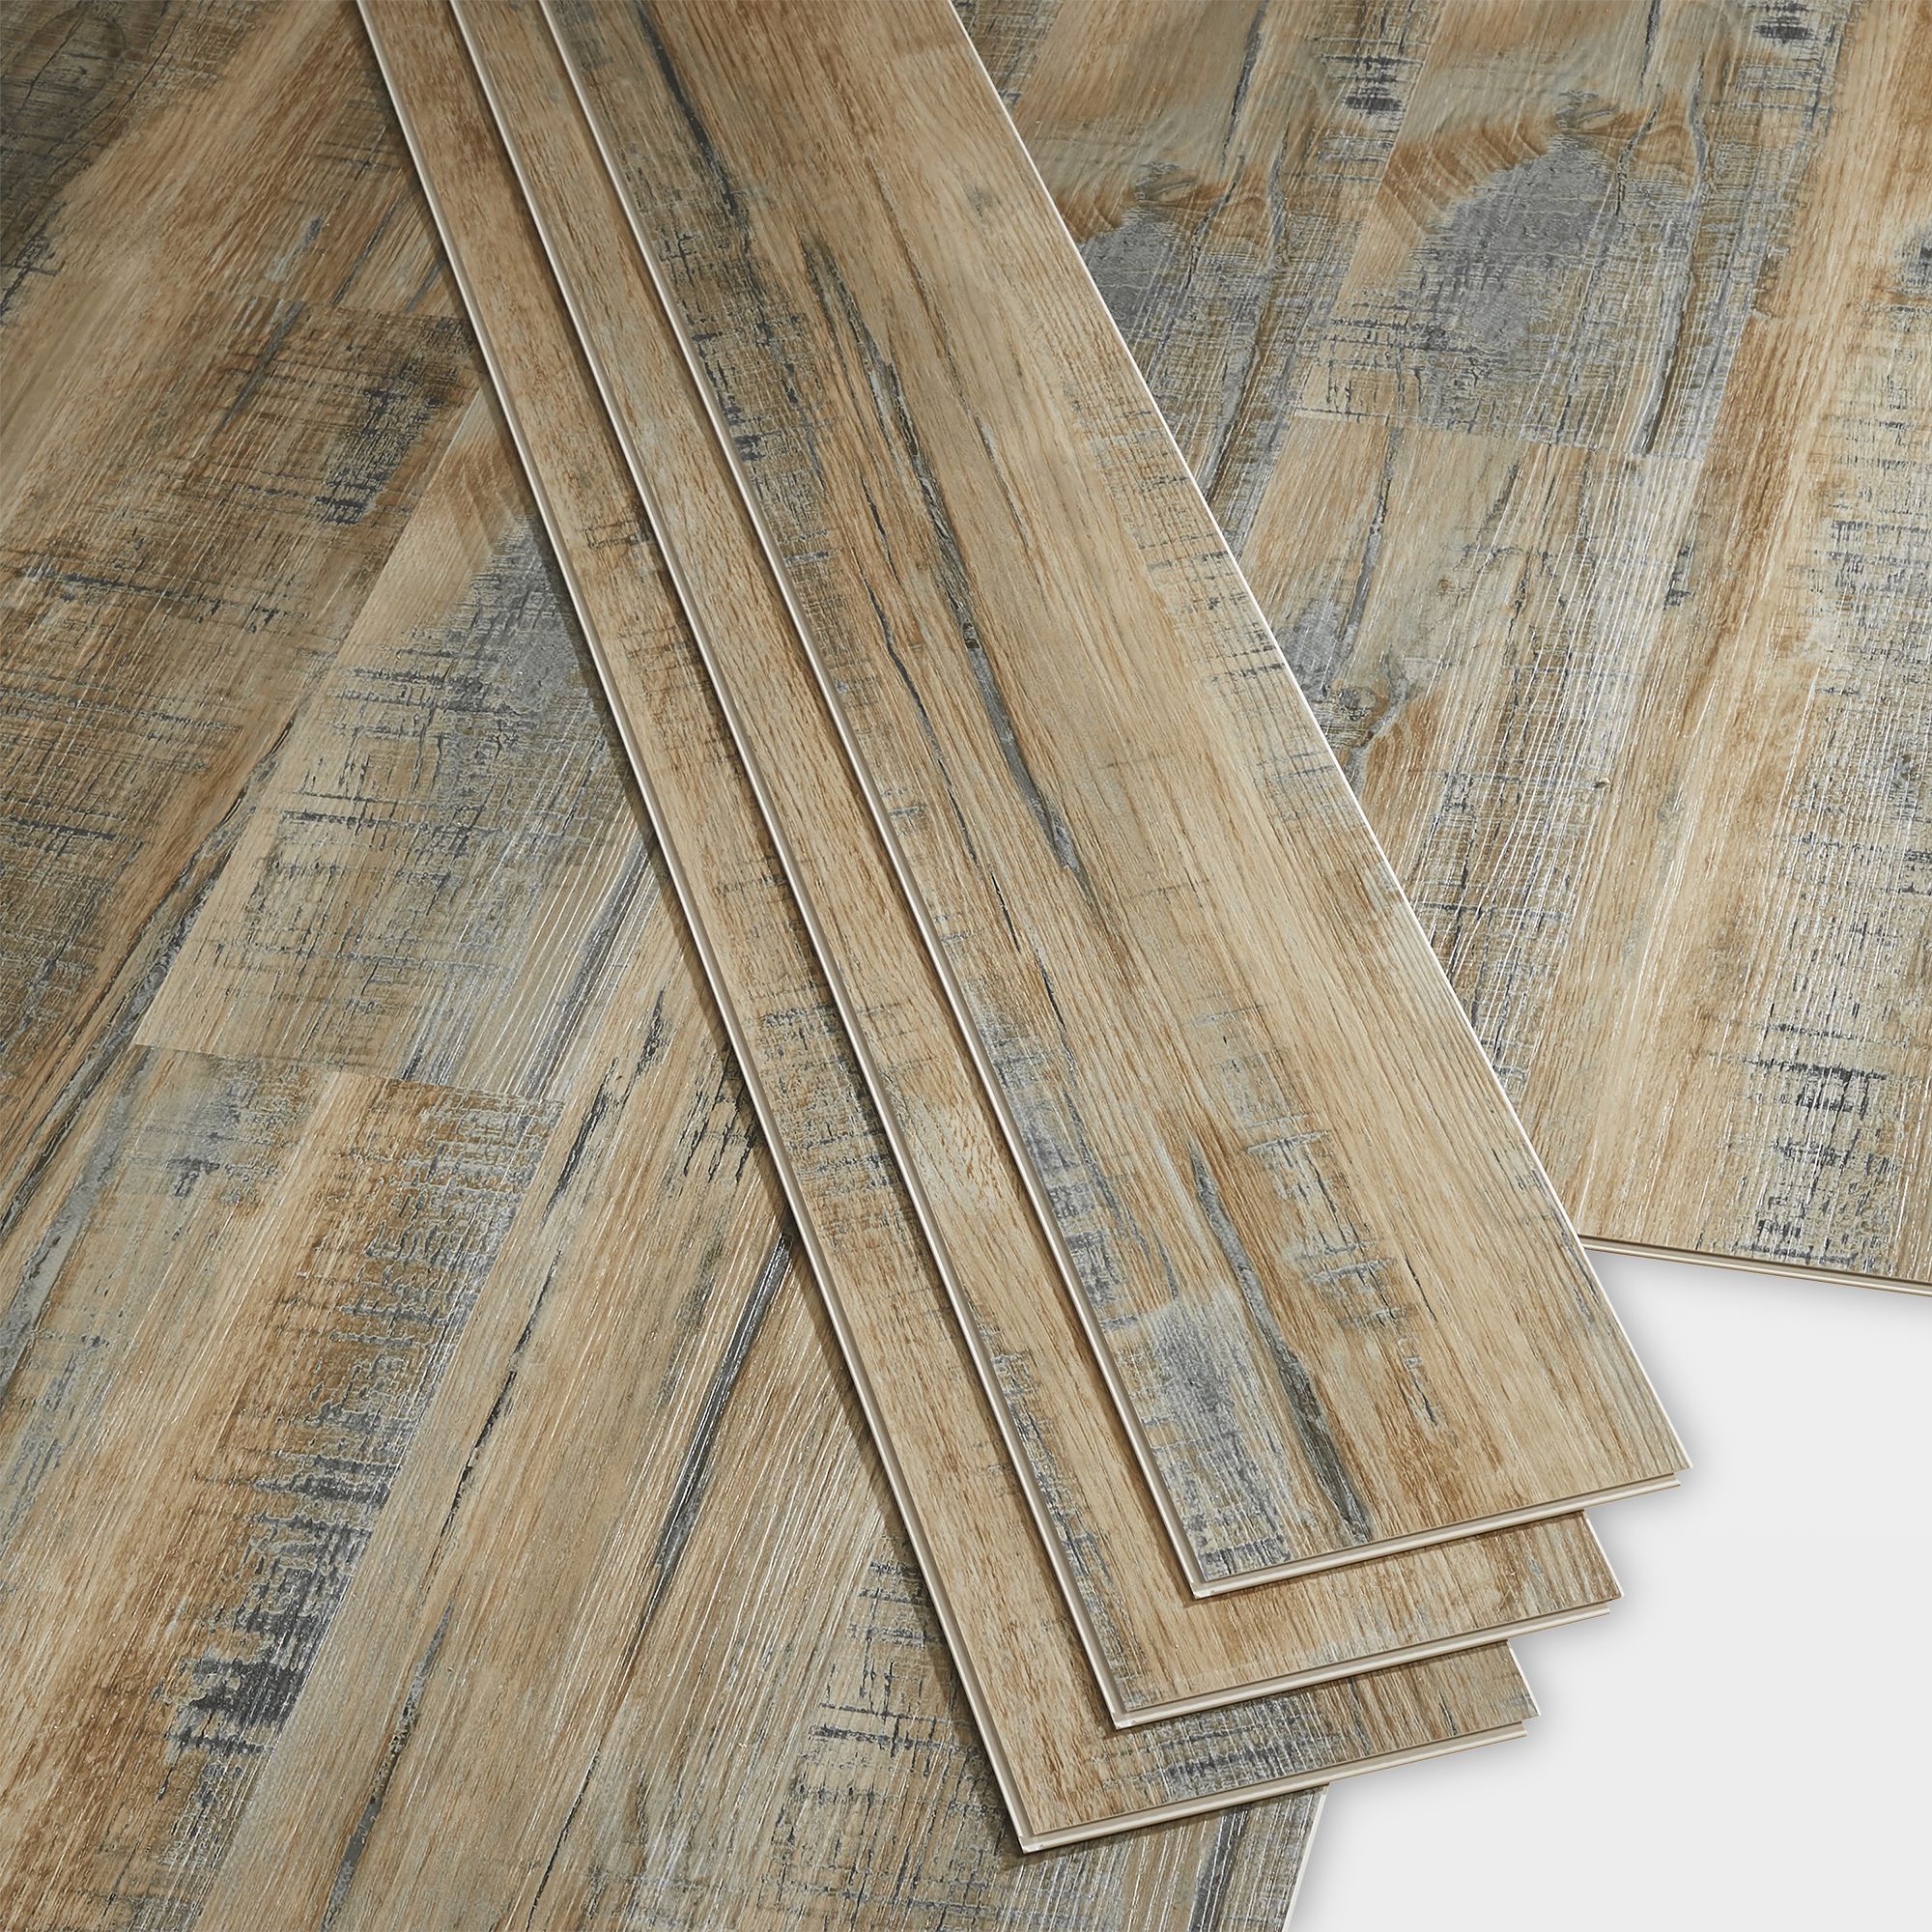 Baila Rustic Wood effect Click vinyl Flooring Sample